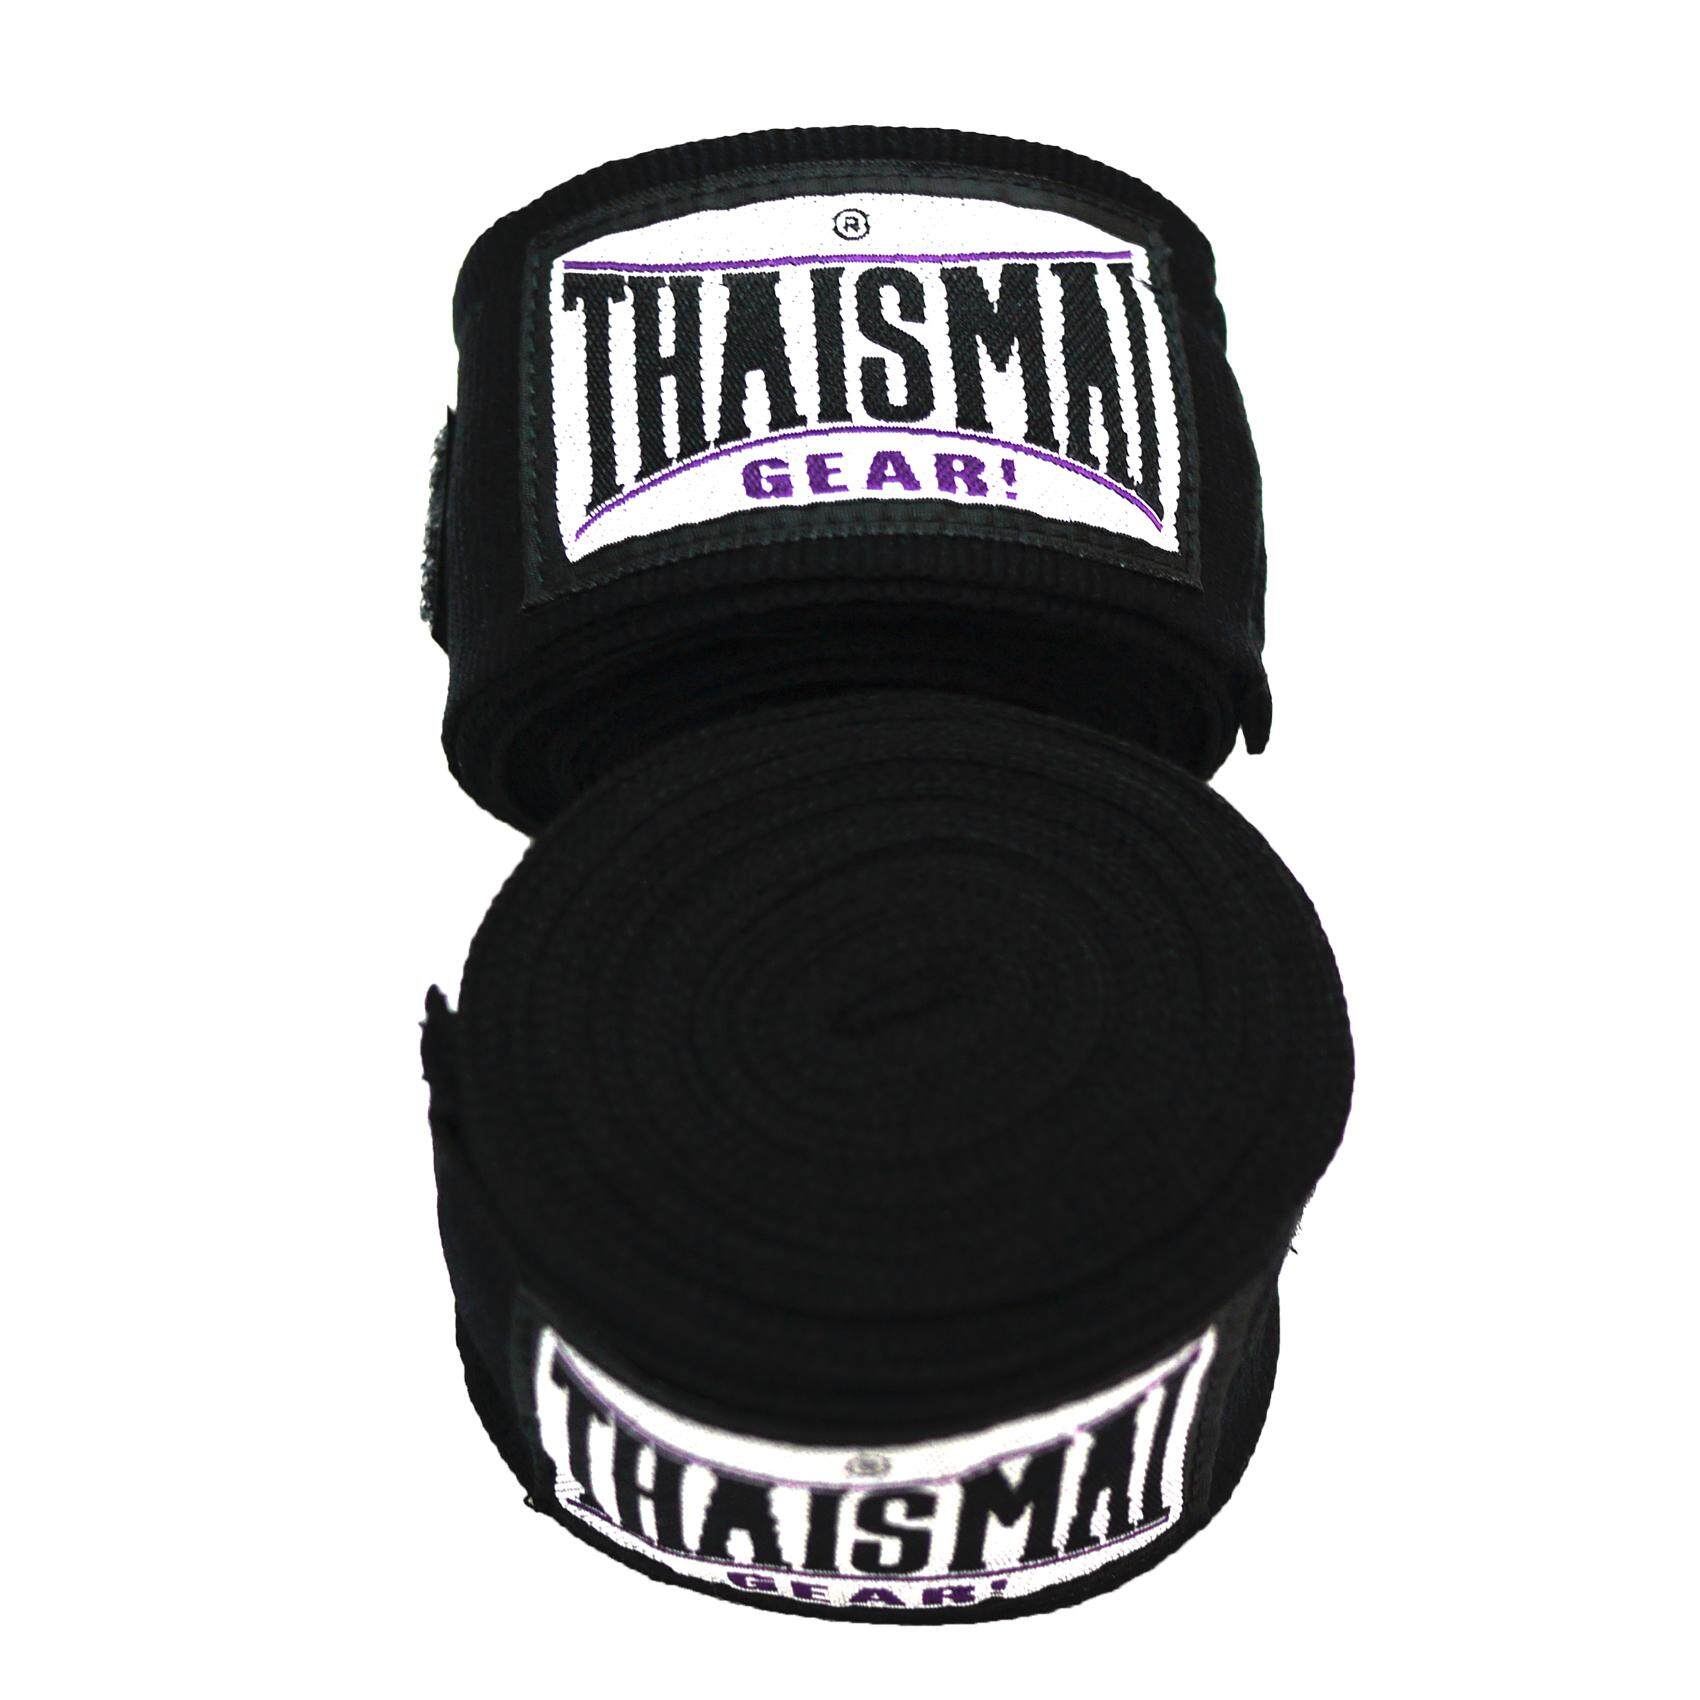 THAISMAI ผ้าพันมือซ้อมมวย Hand Wraps  HW-7003 4.5 M.Long (Black)